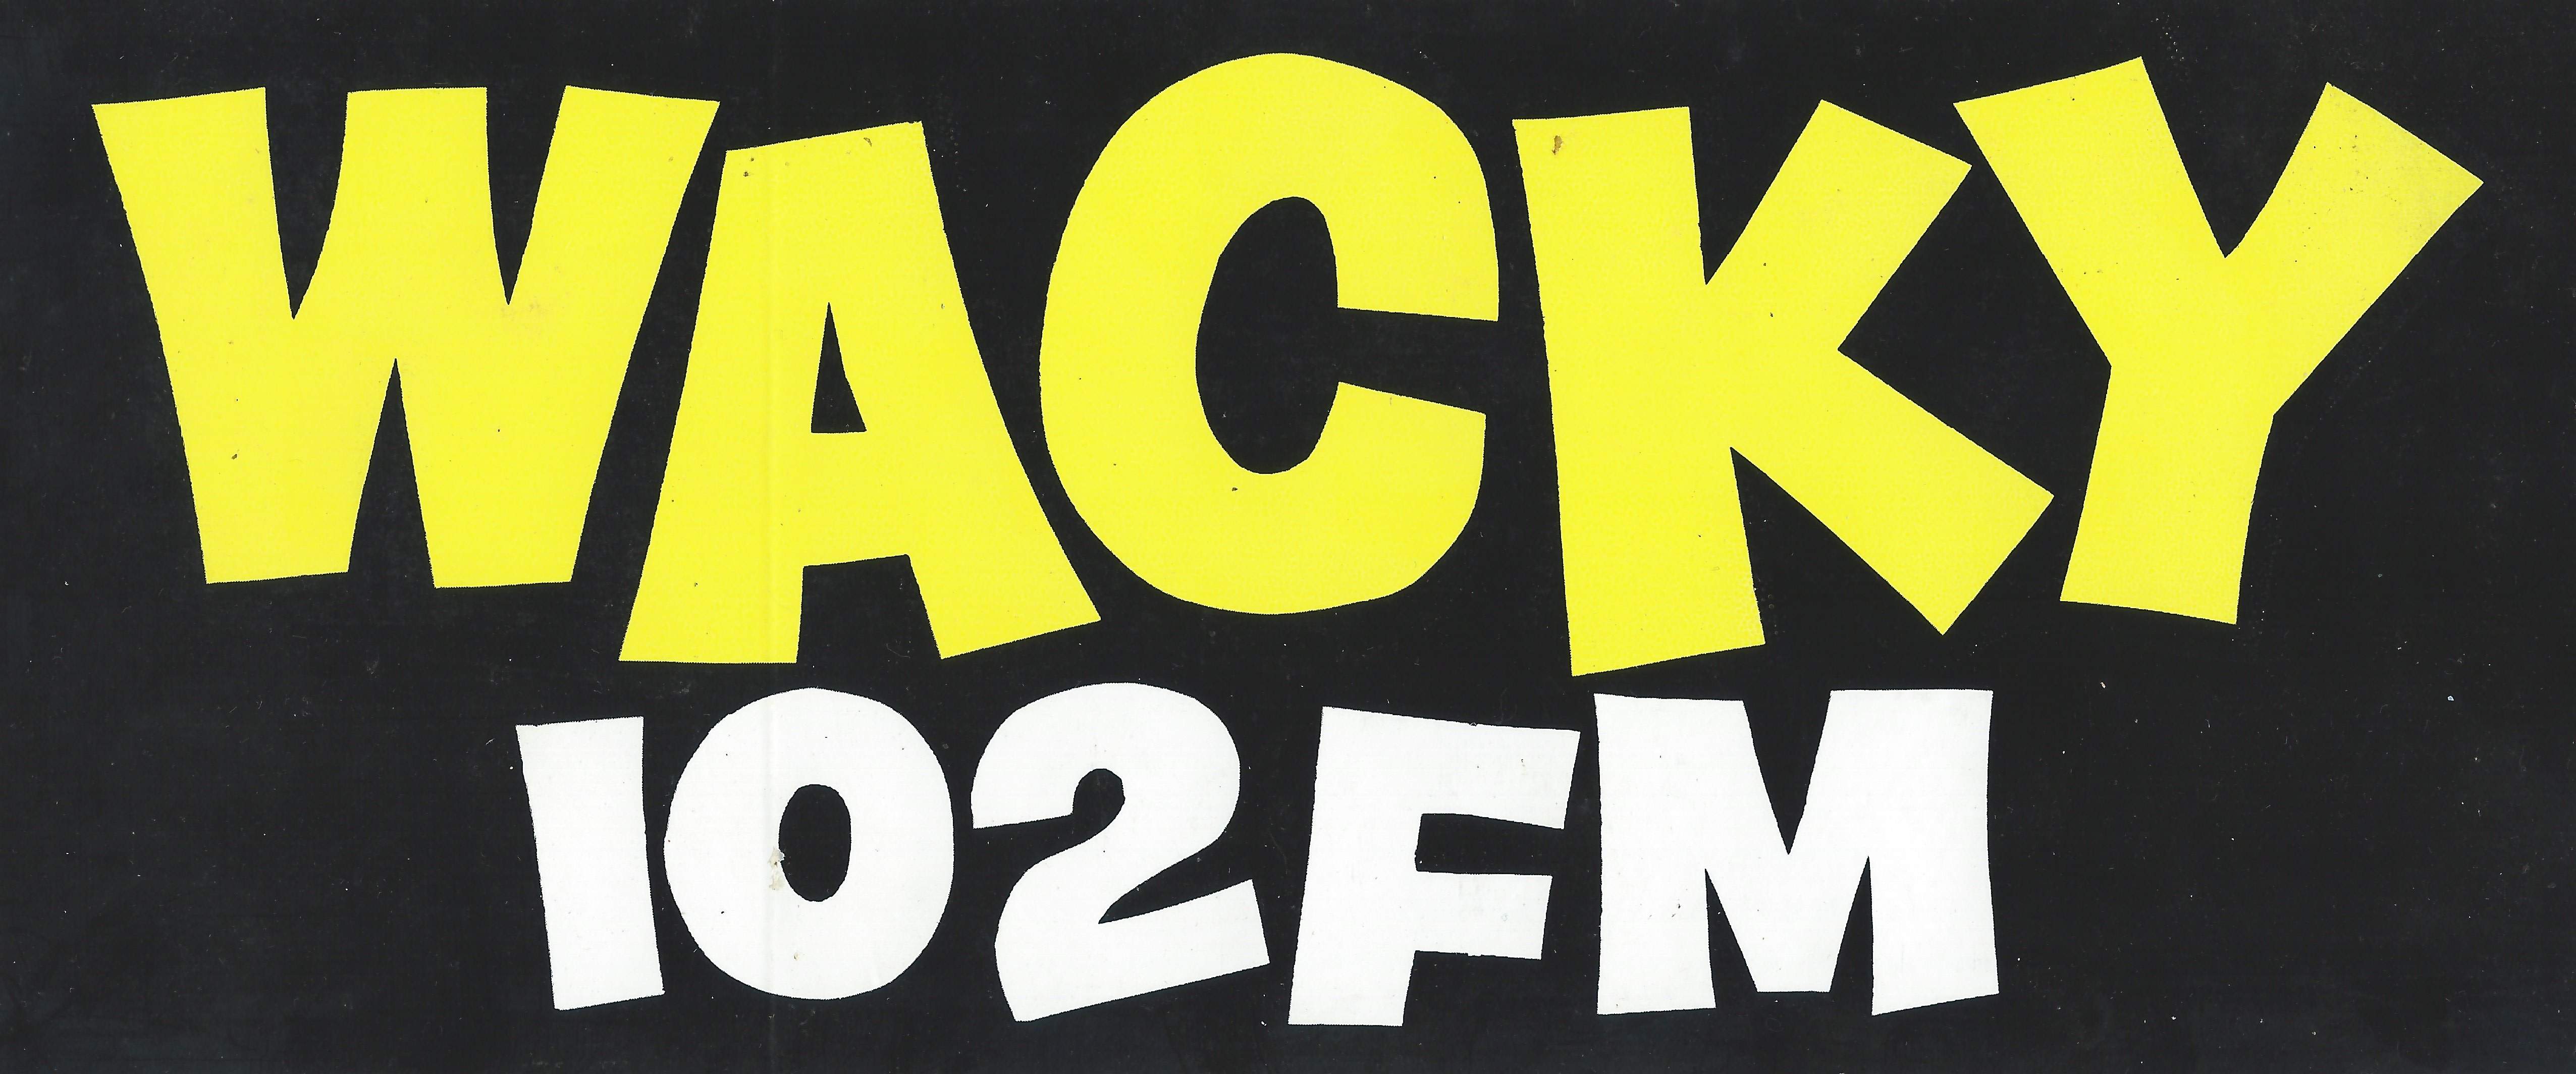 Wacky Yellow-On-Black Bumpersticker